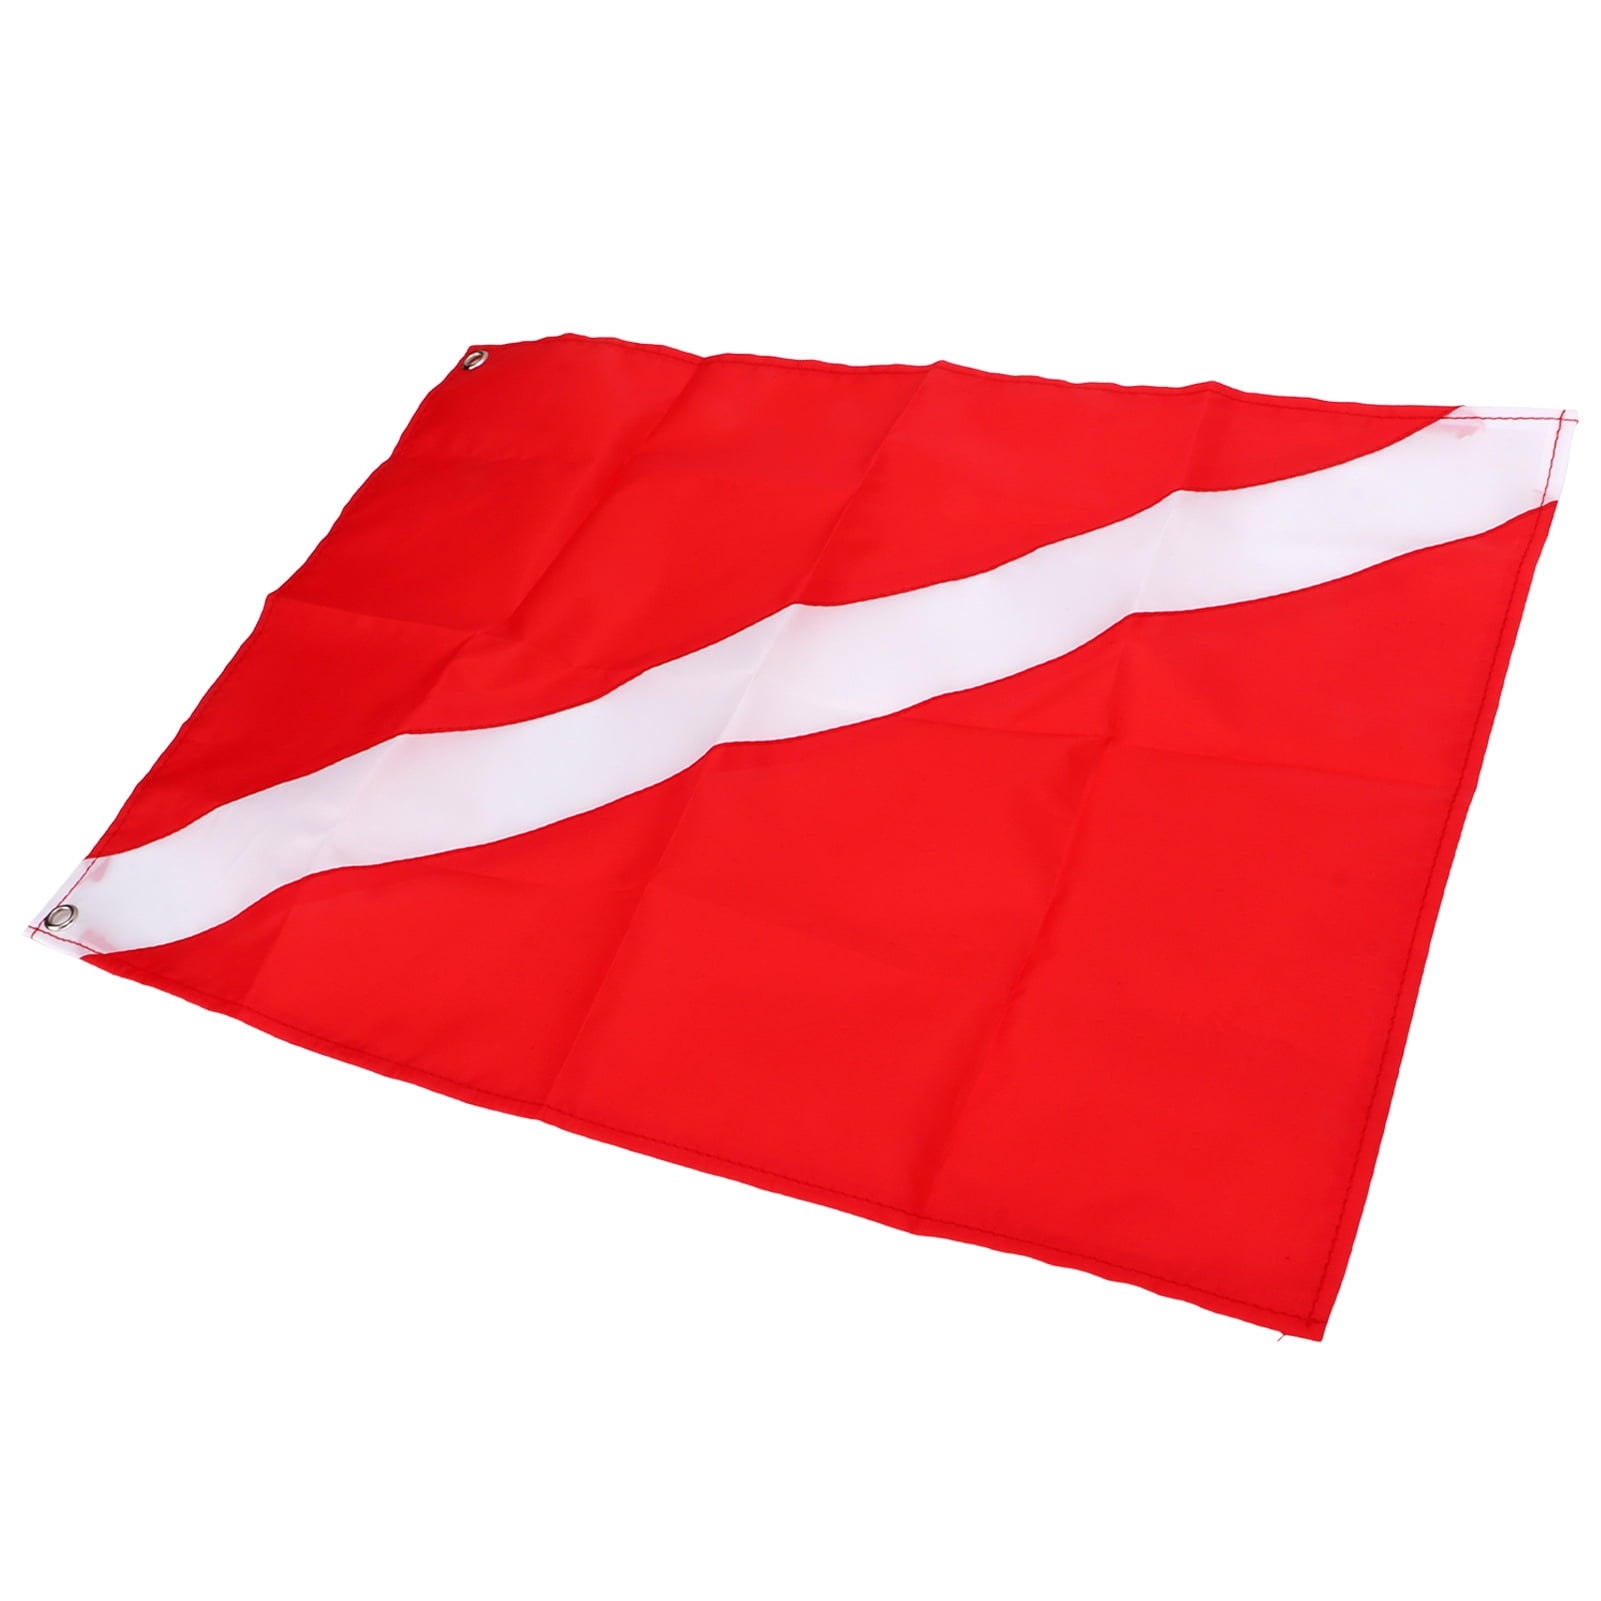 Red White Diver Down Flag Scuba Dive Snorkel Free Diving Equipment 50x35 cm 